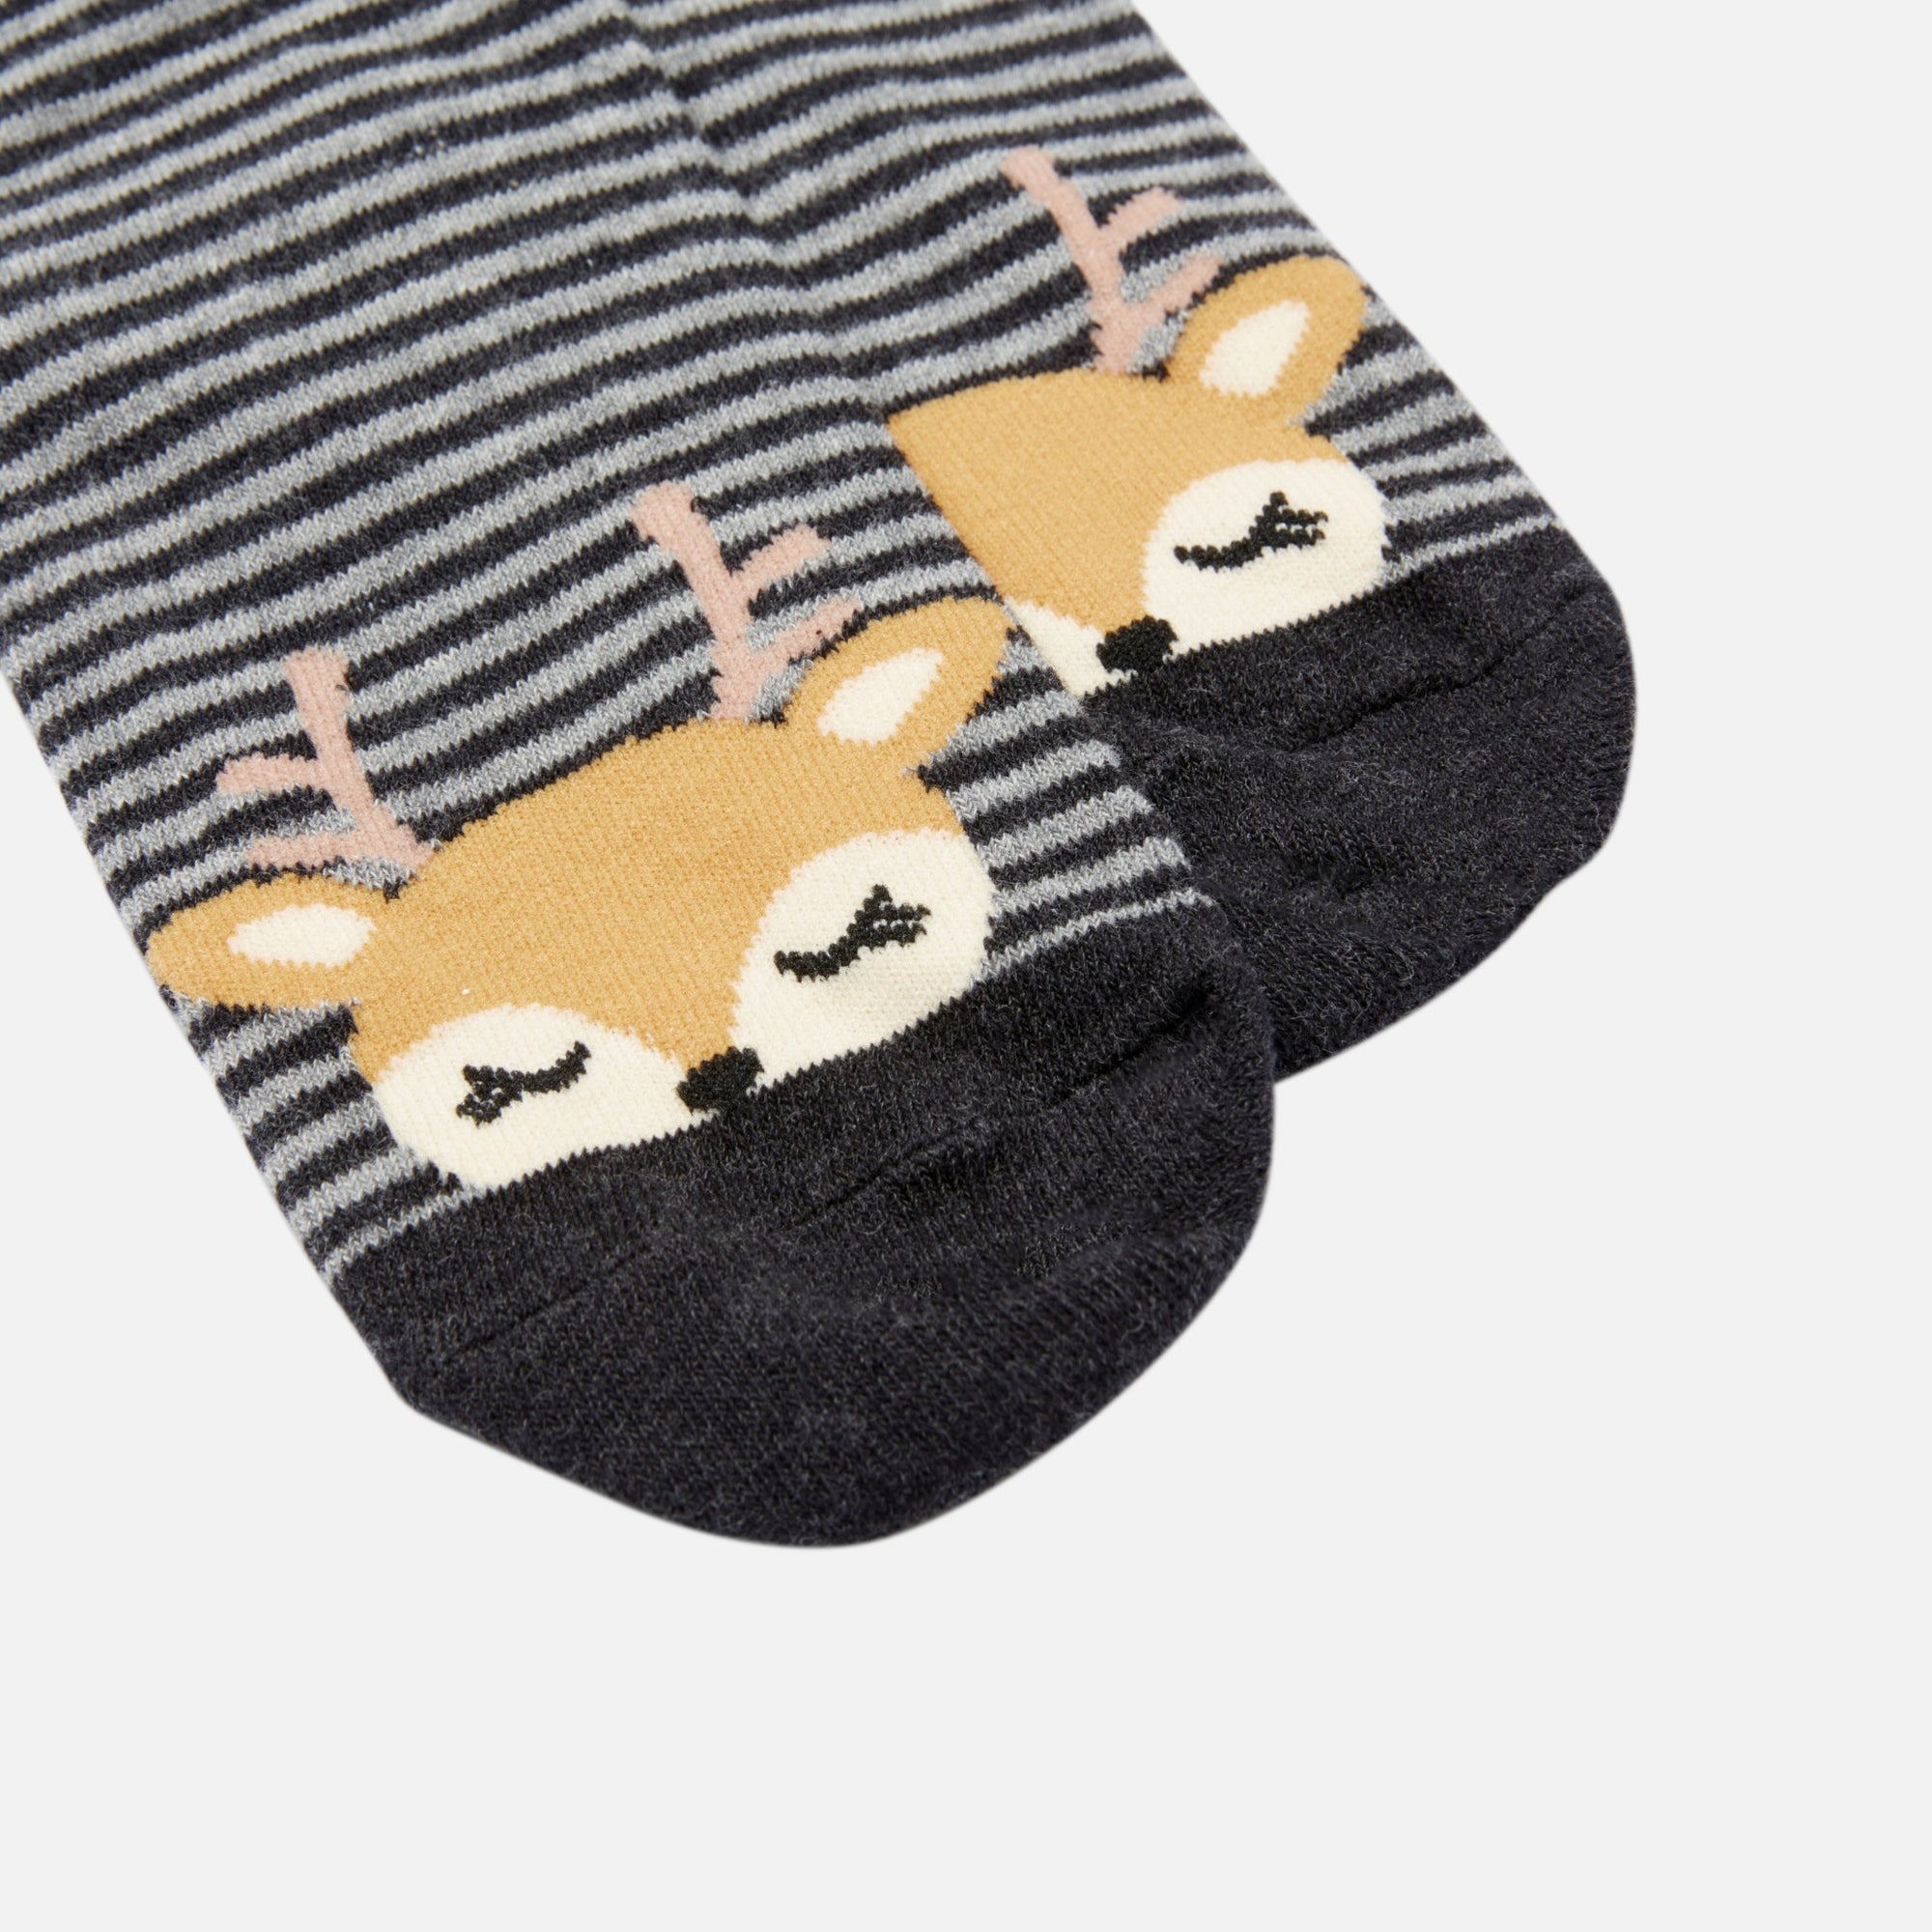 Black socks with stripes and deer 